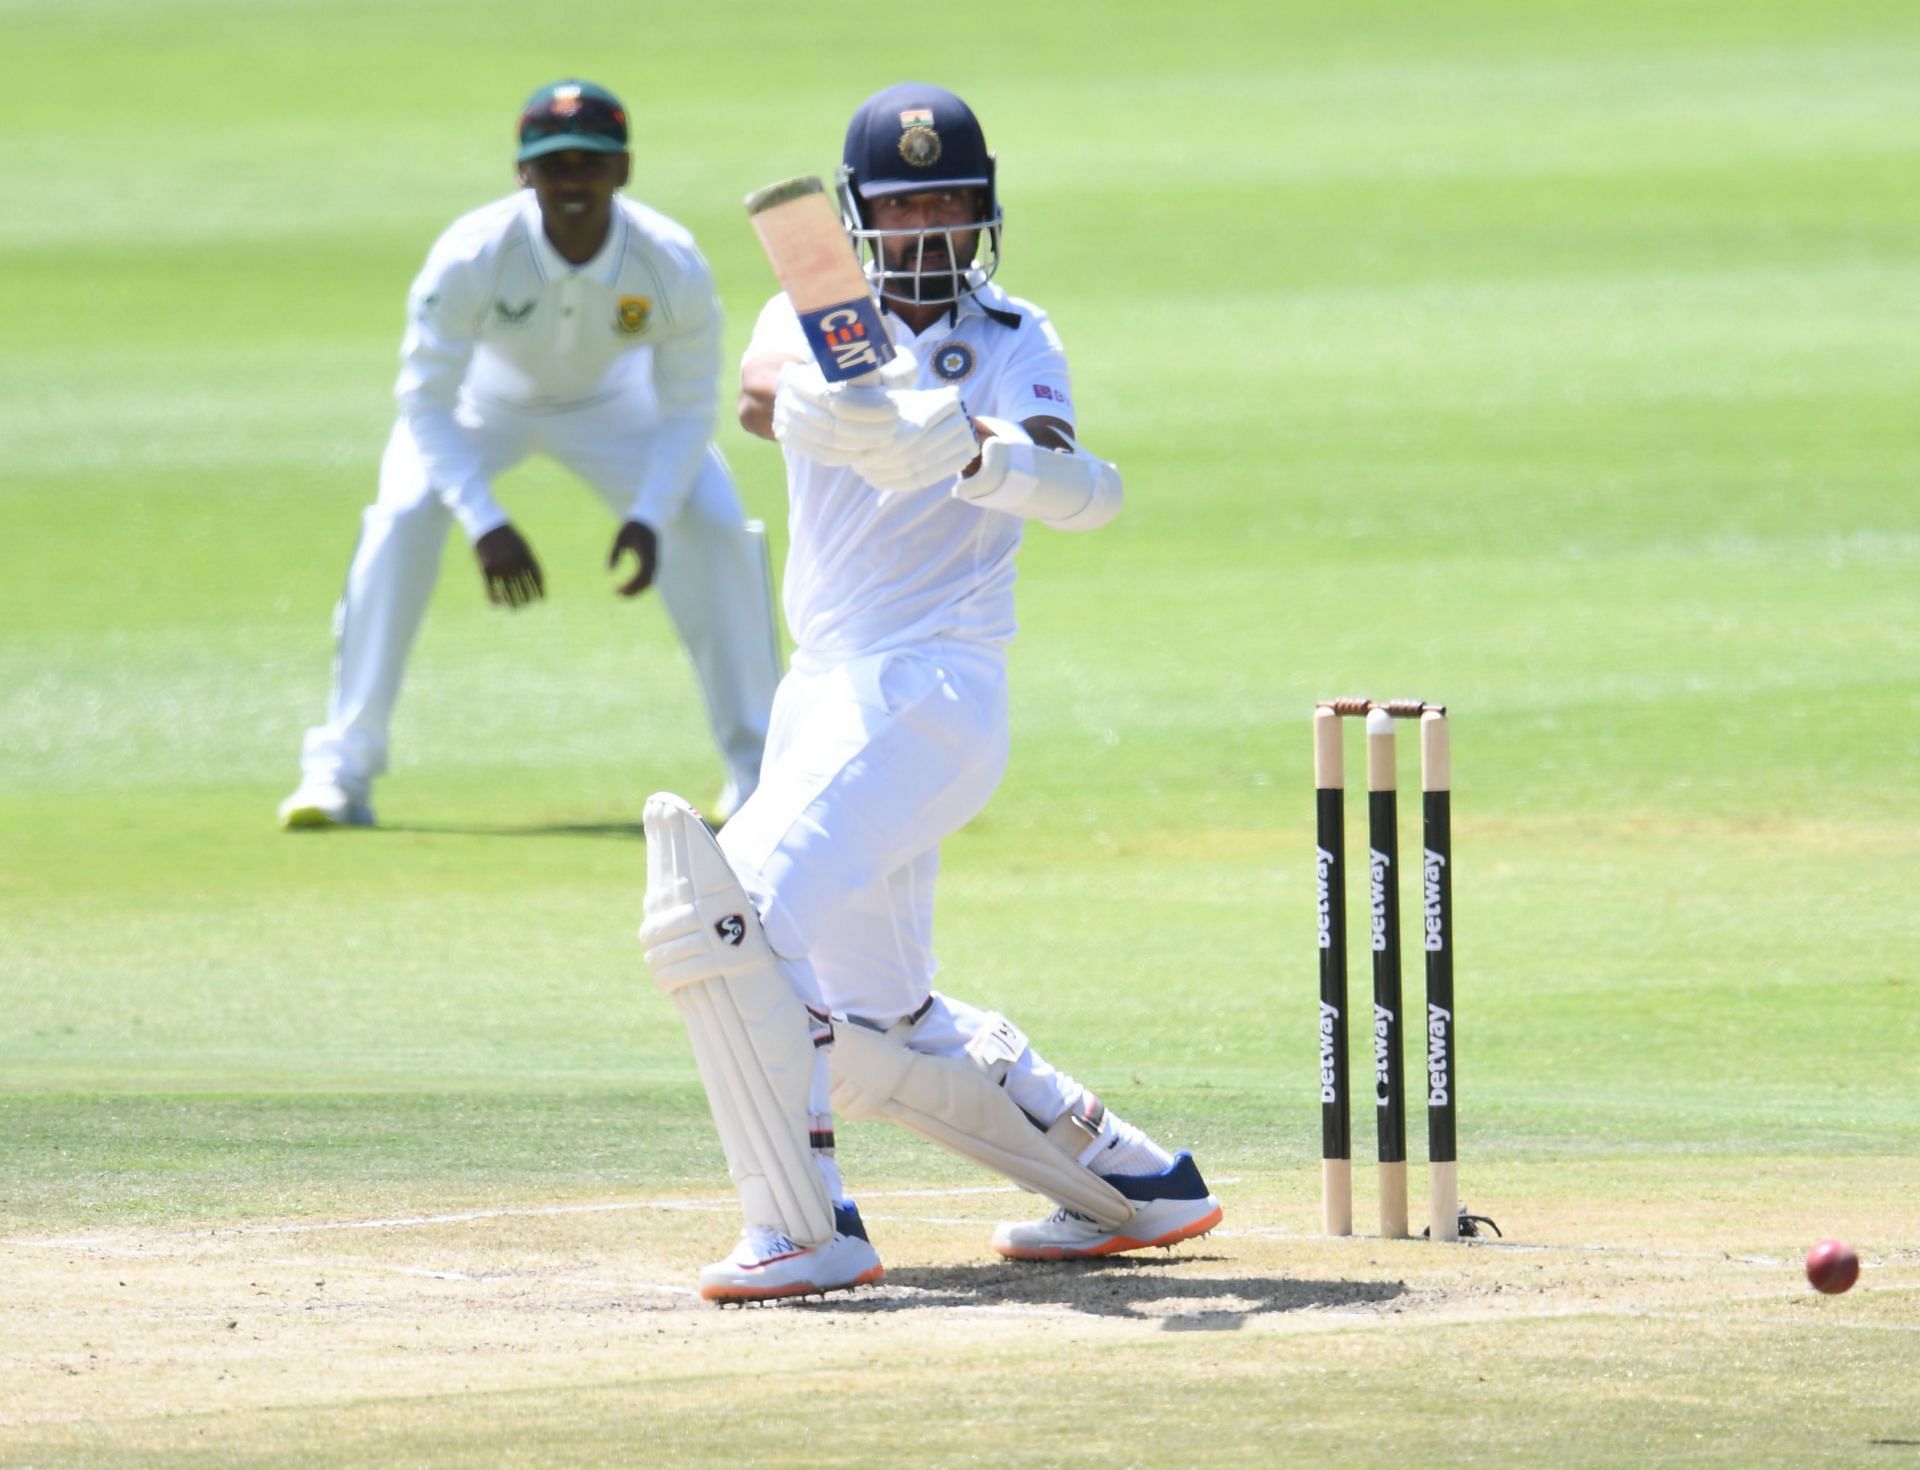 Ajinkya Rahane scored a half-century in the second innings of the Johannesburg Test